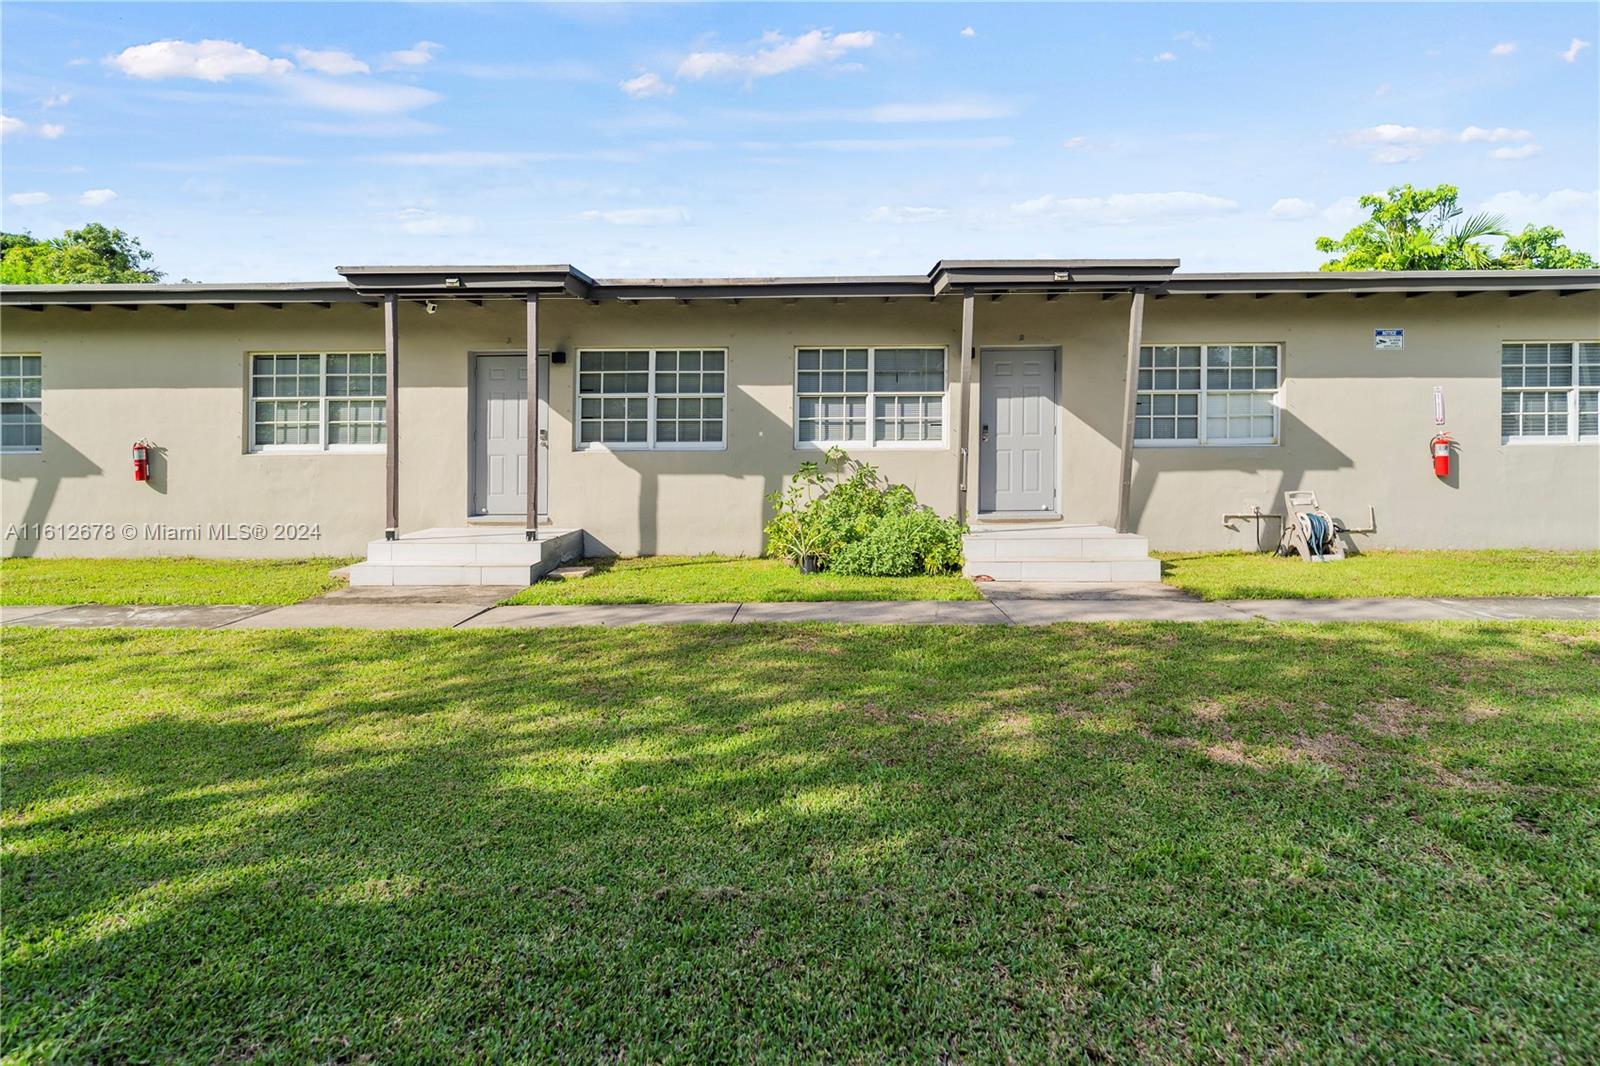 Rental Property at 12108 Ne 5th Ave, North Miami, Miami-Dade County, Florida -  - $999,999 MO.